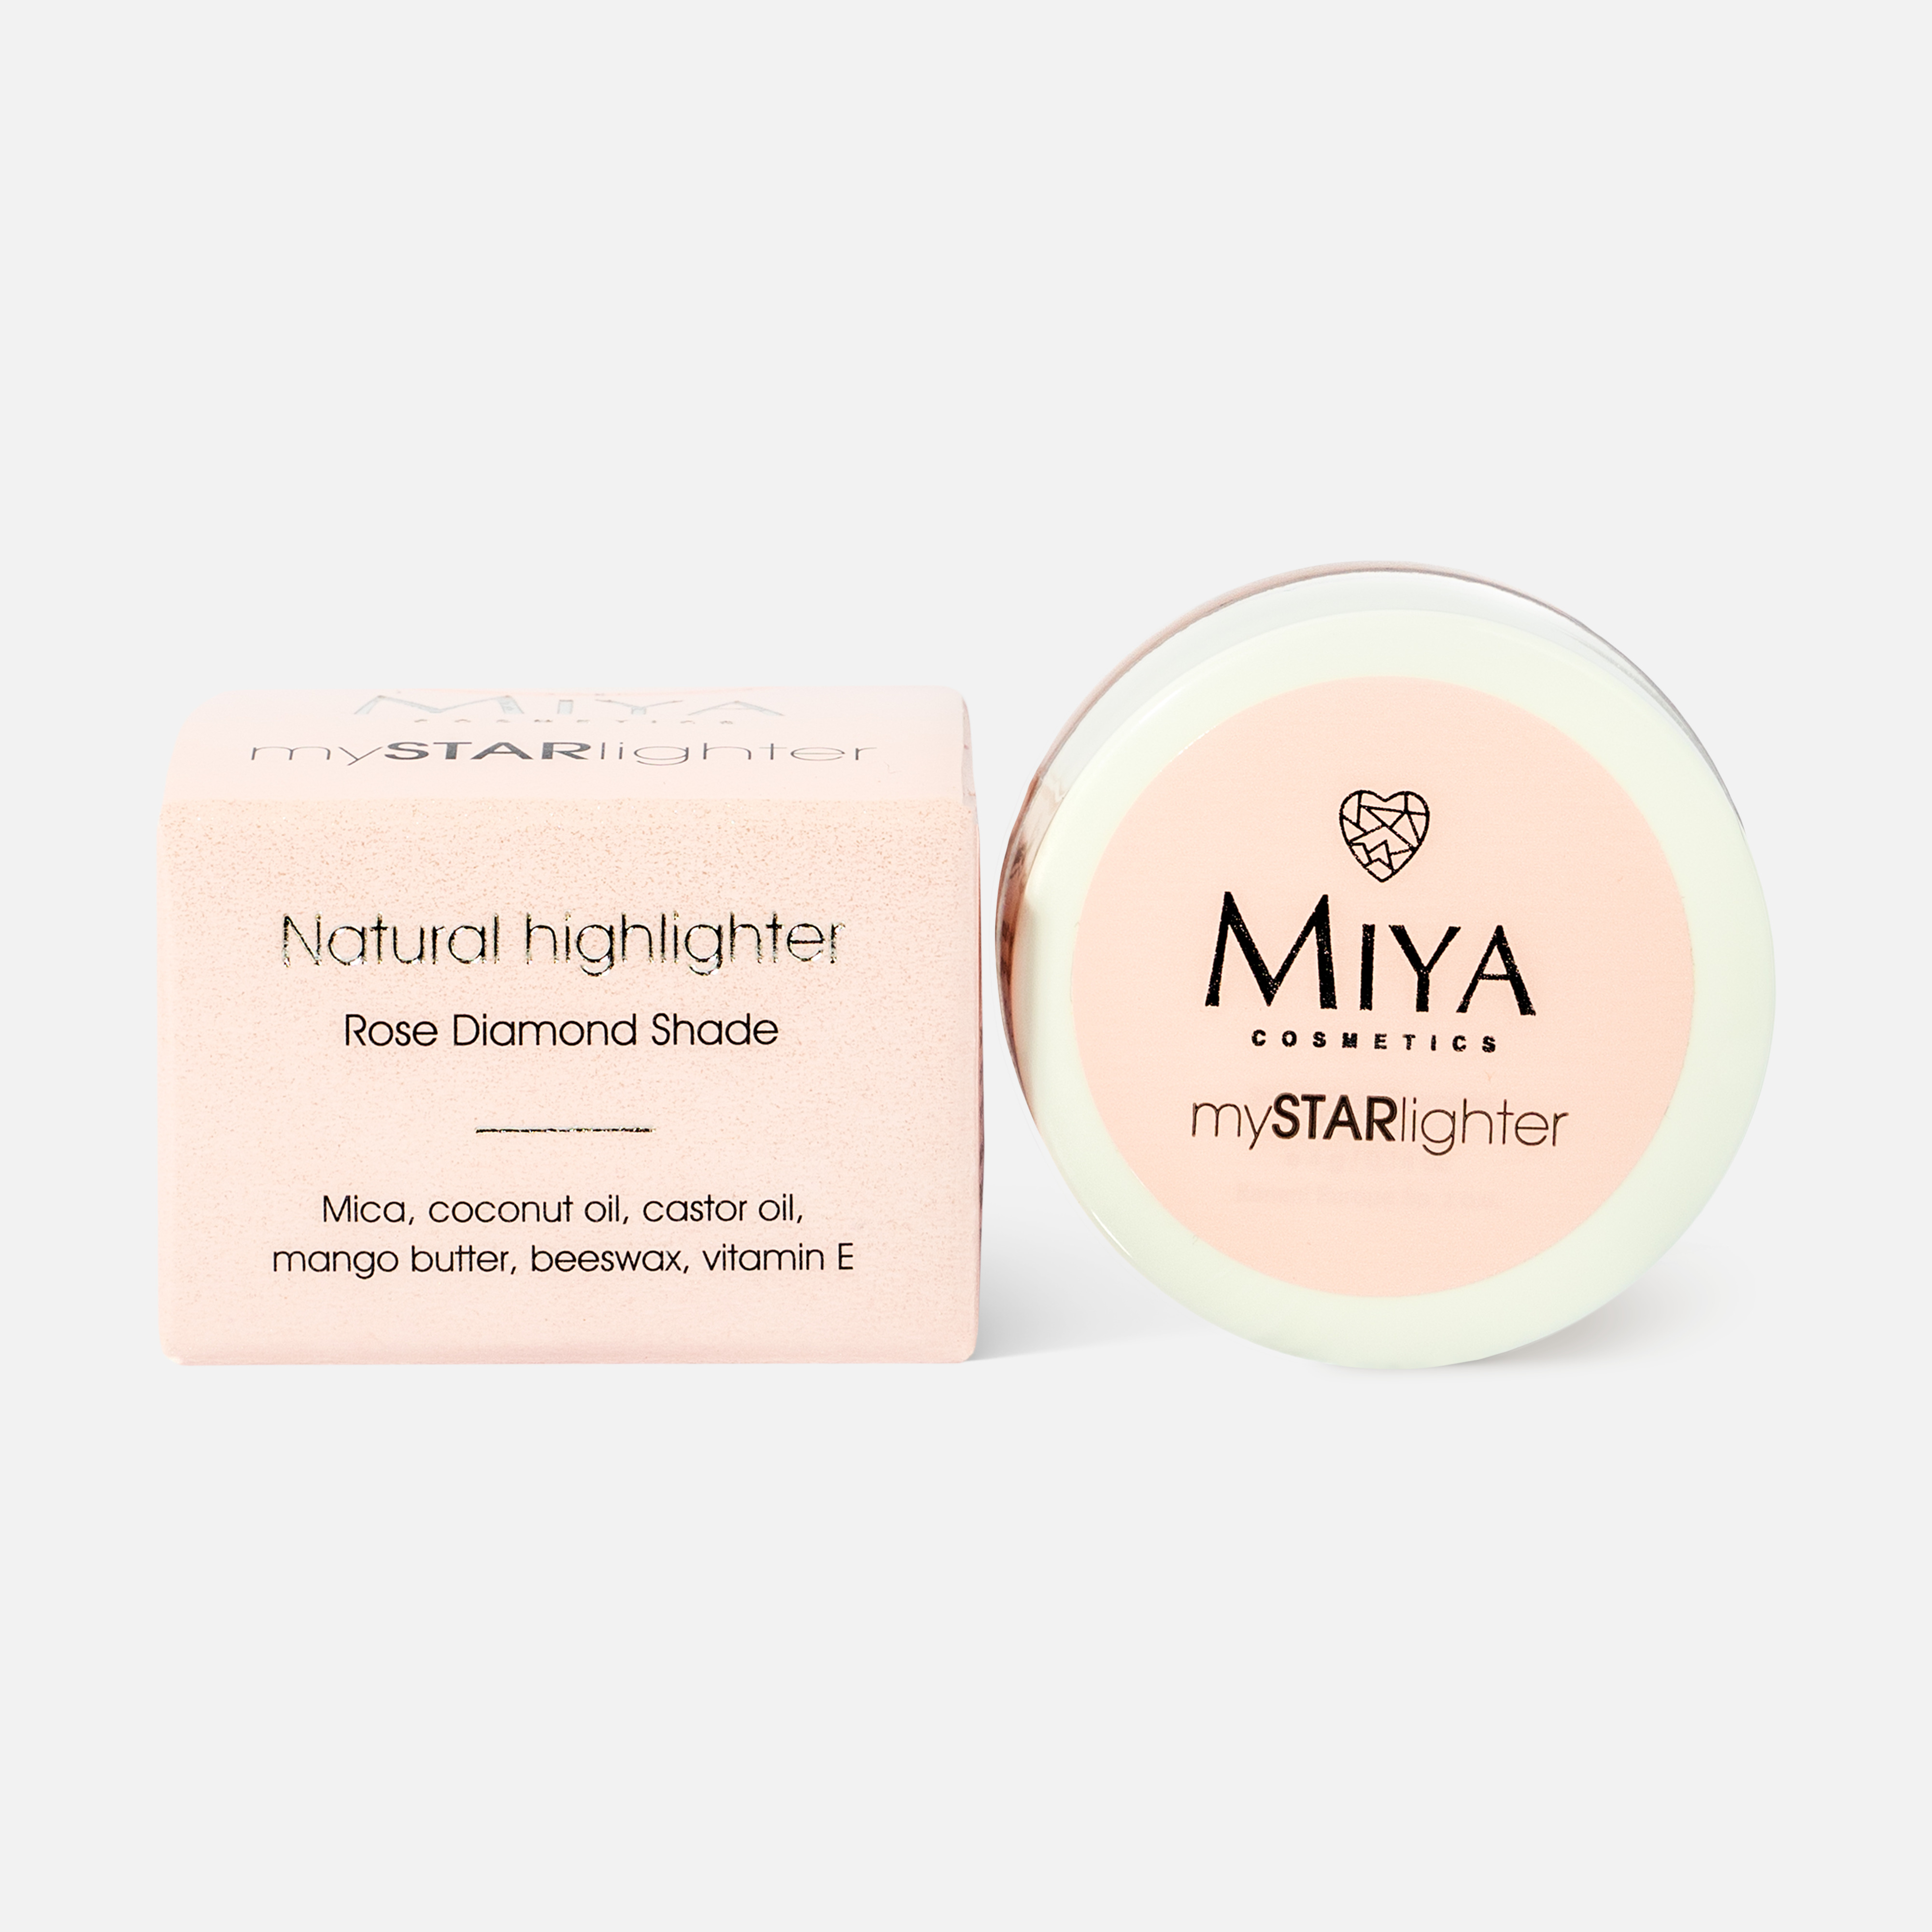 Хайлайтер для лица Miya cosmetics Mystarlighter Rose Diamond, 4 г хайлайтер для лица lavelle highlighter 02 натуральный 6 6 г